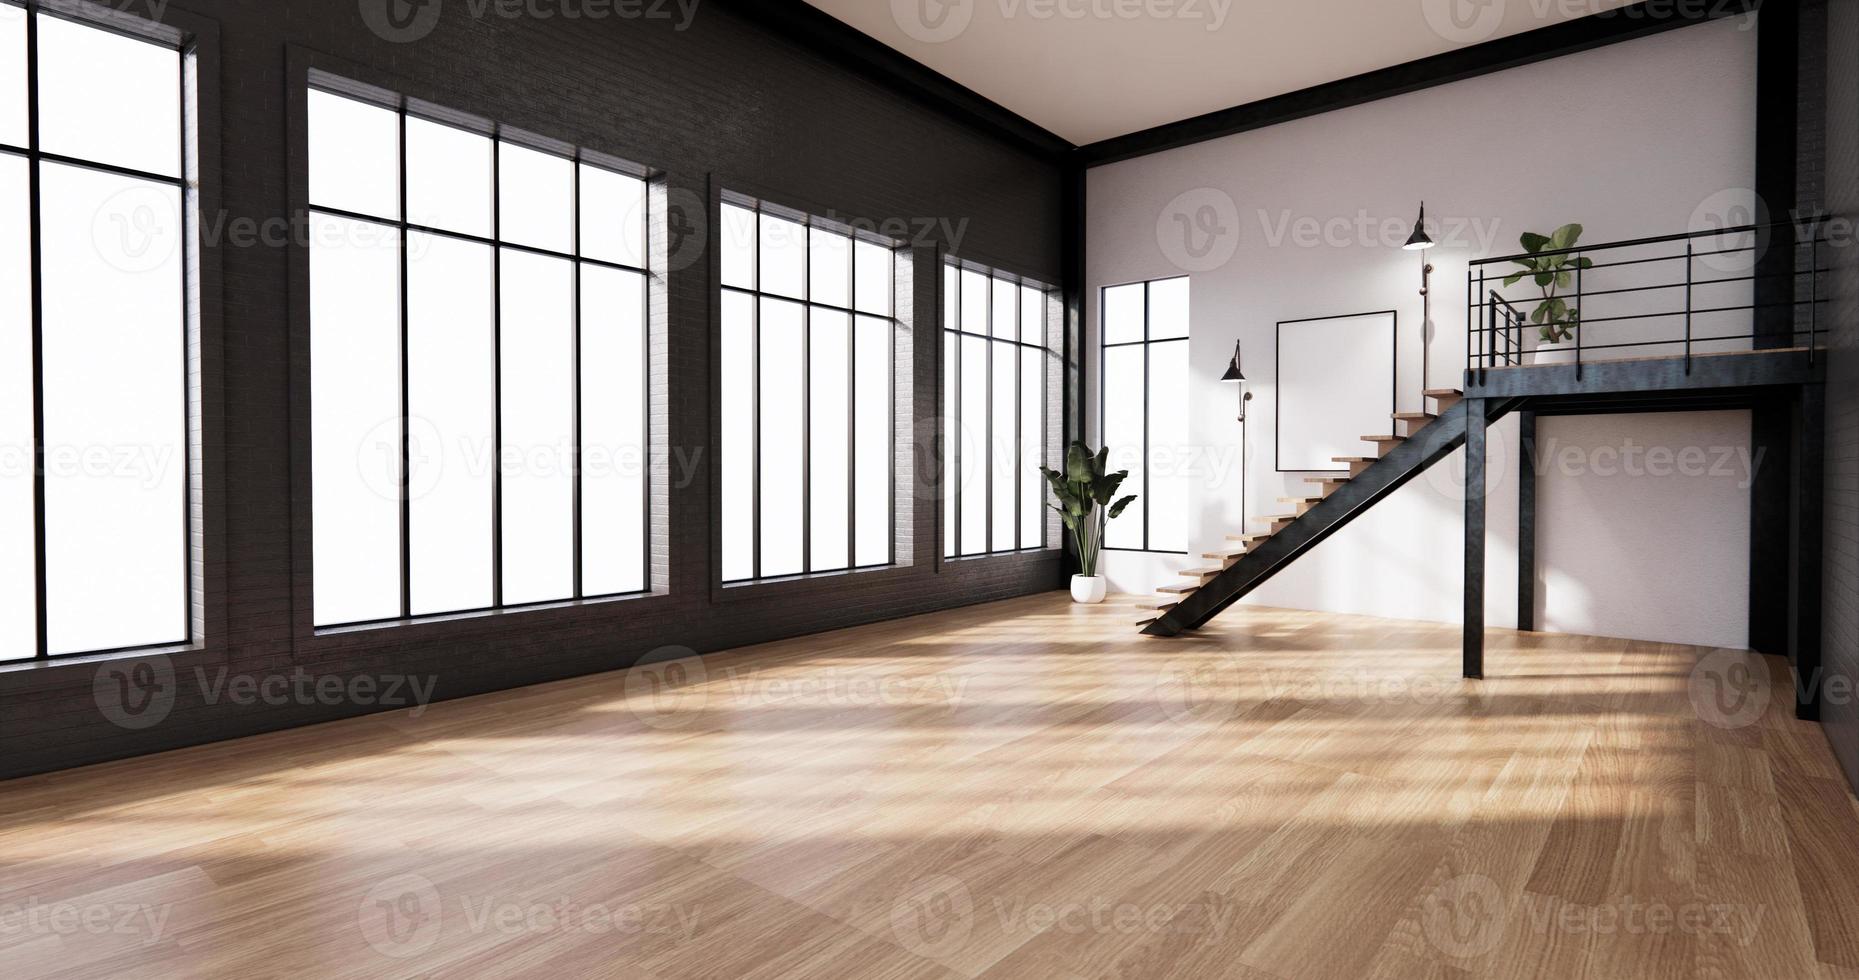 l'interior design, interni moderni in stile loft. rendering 3d foto